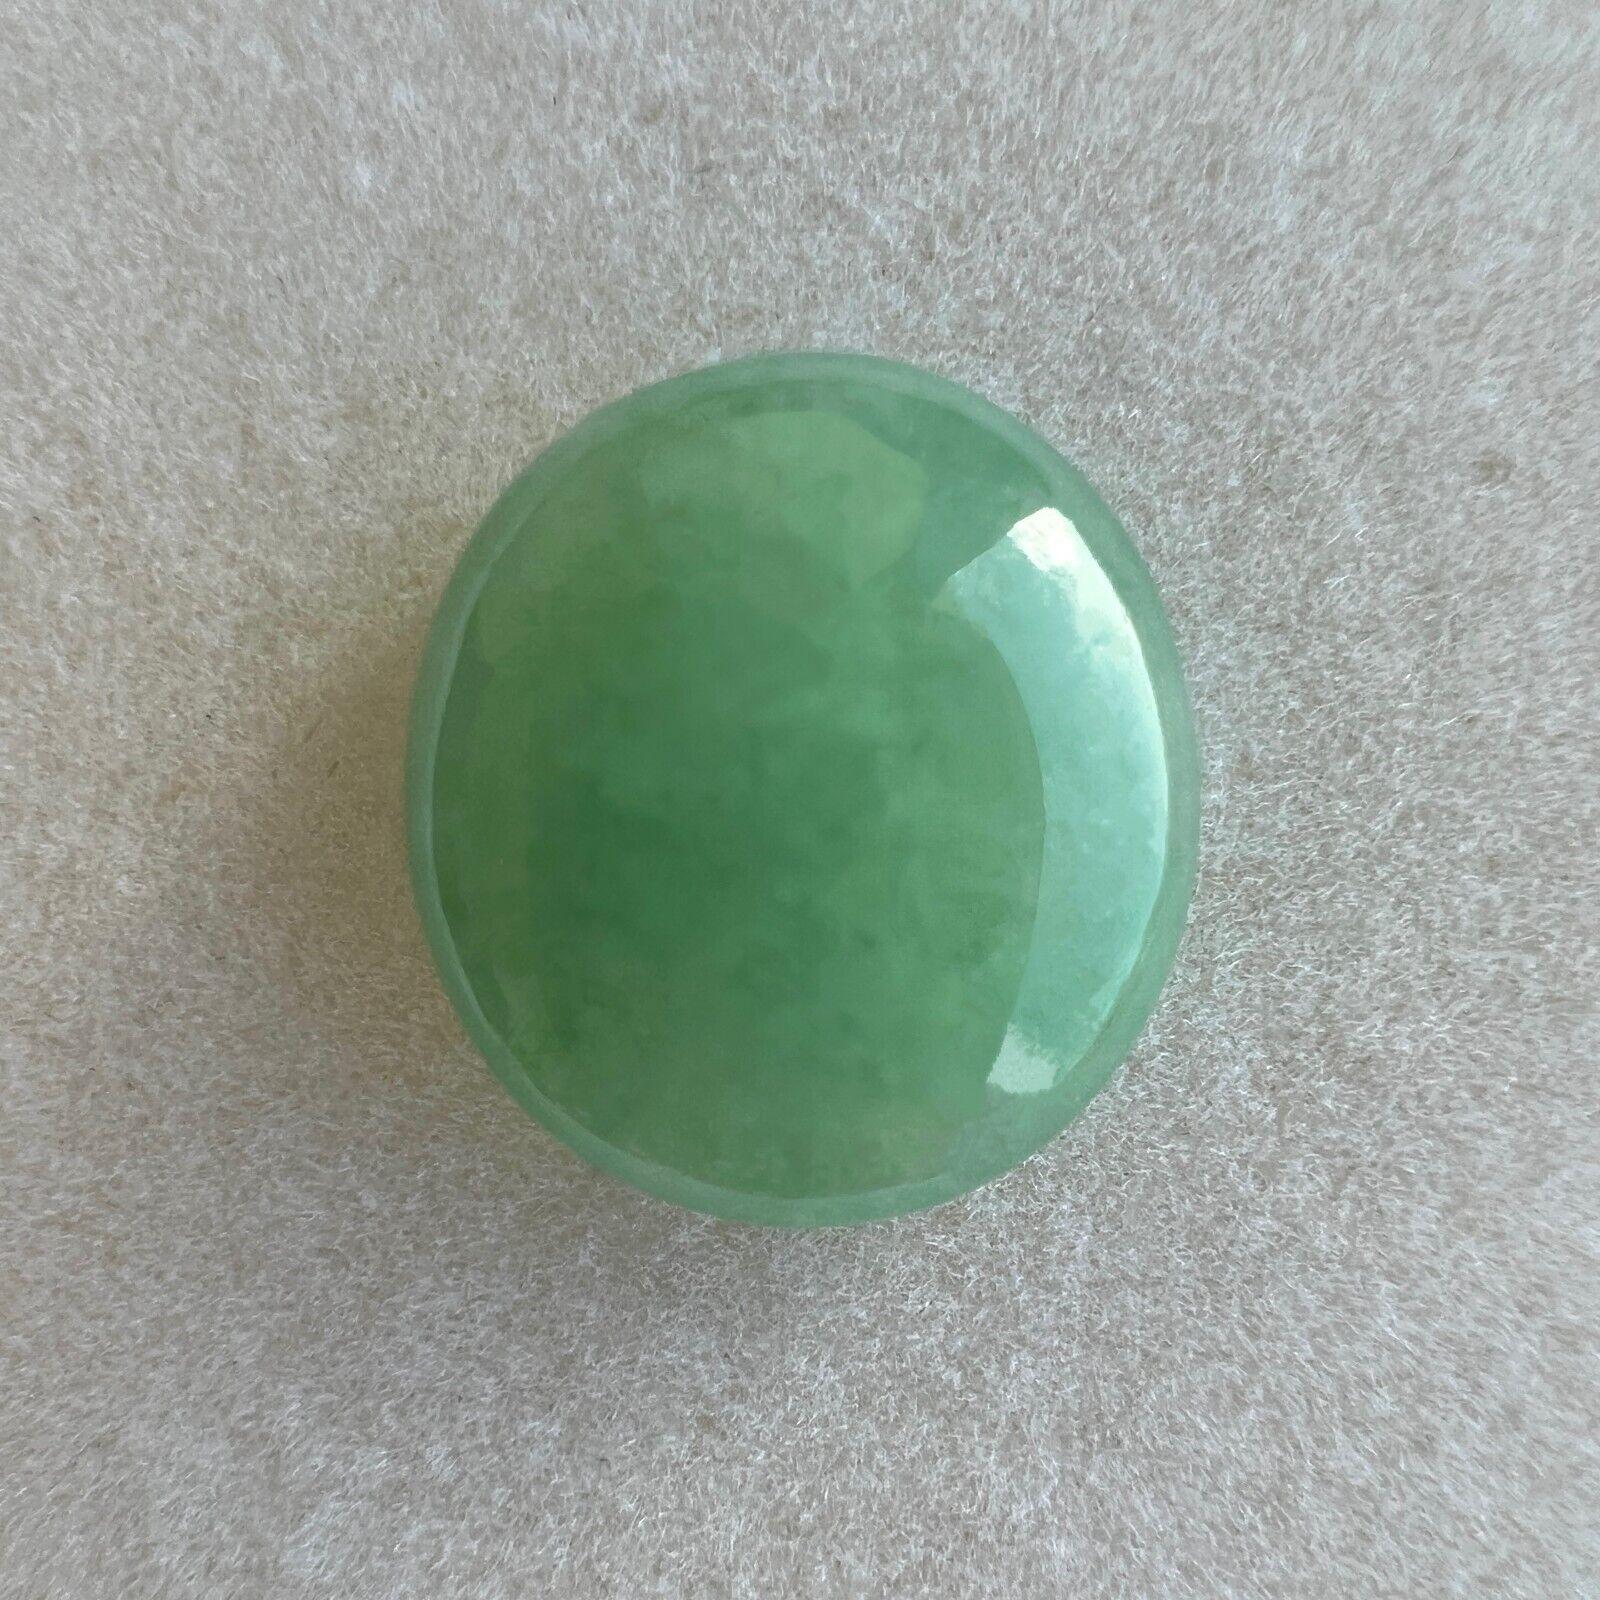 Oval Cut 9.87ct Green Jadeite Jade IGI Certified Natural ‘A’ Grade Oval Cabochon Gem For Sale